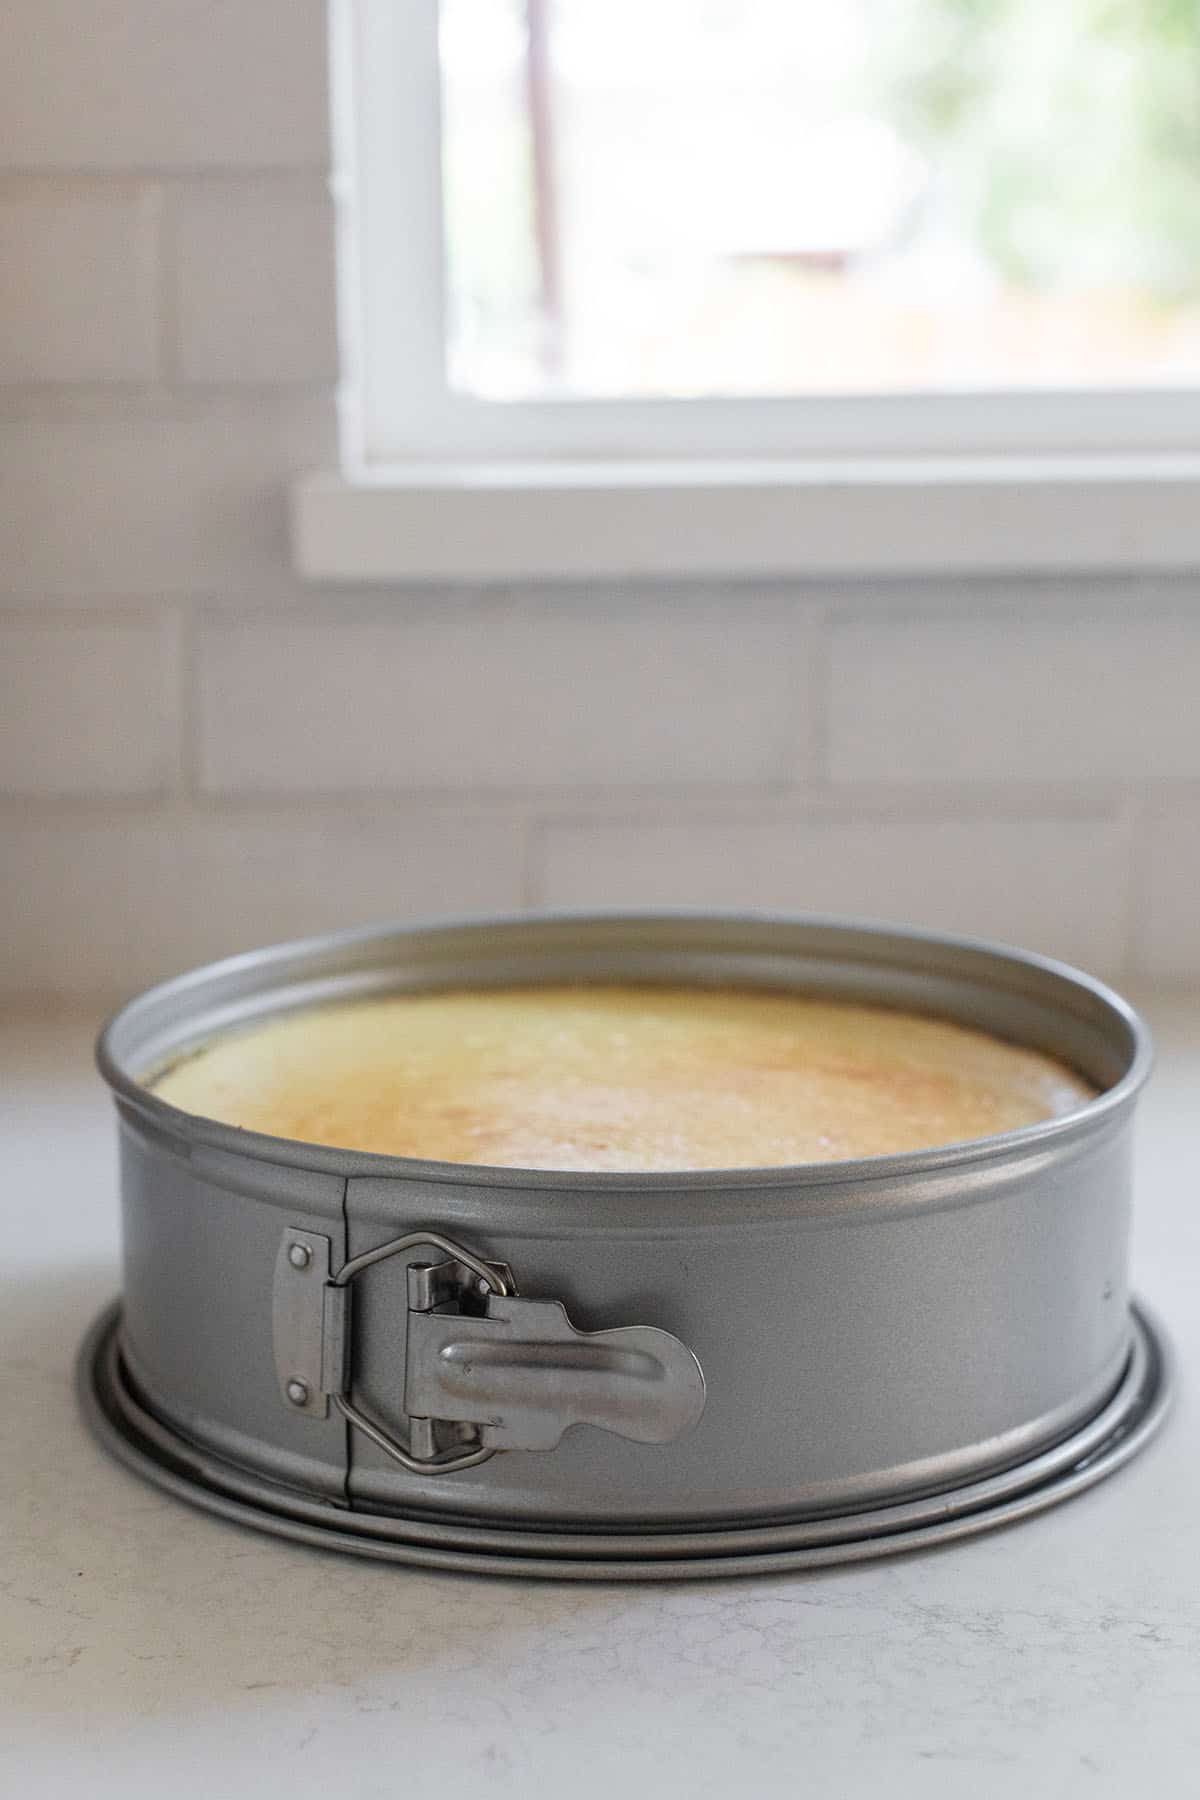 cheesecake in a springform pan 